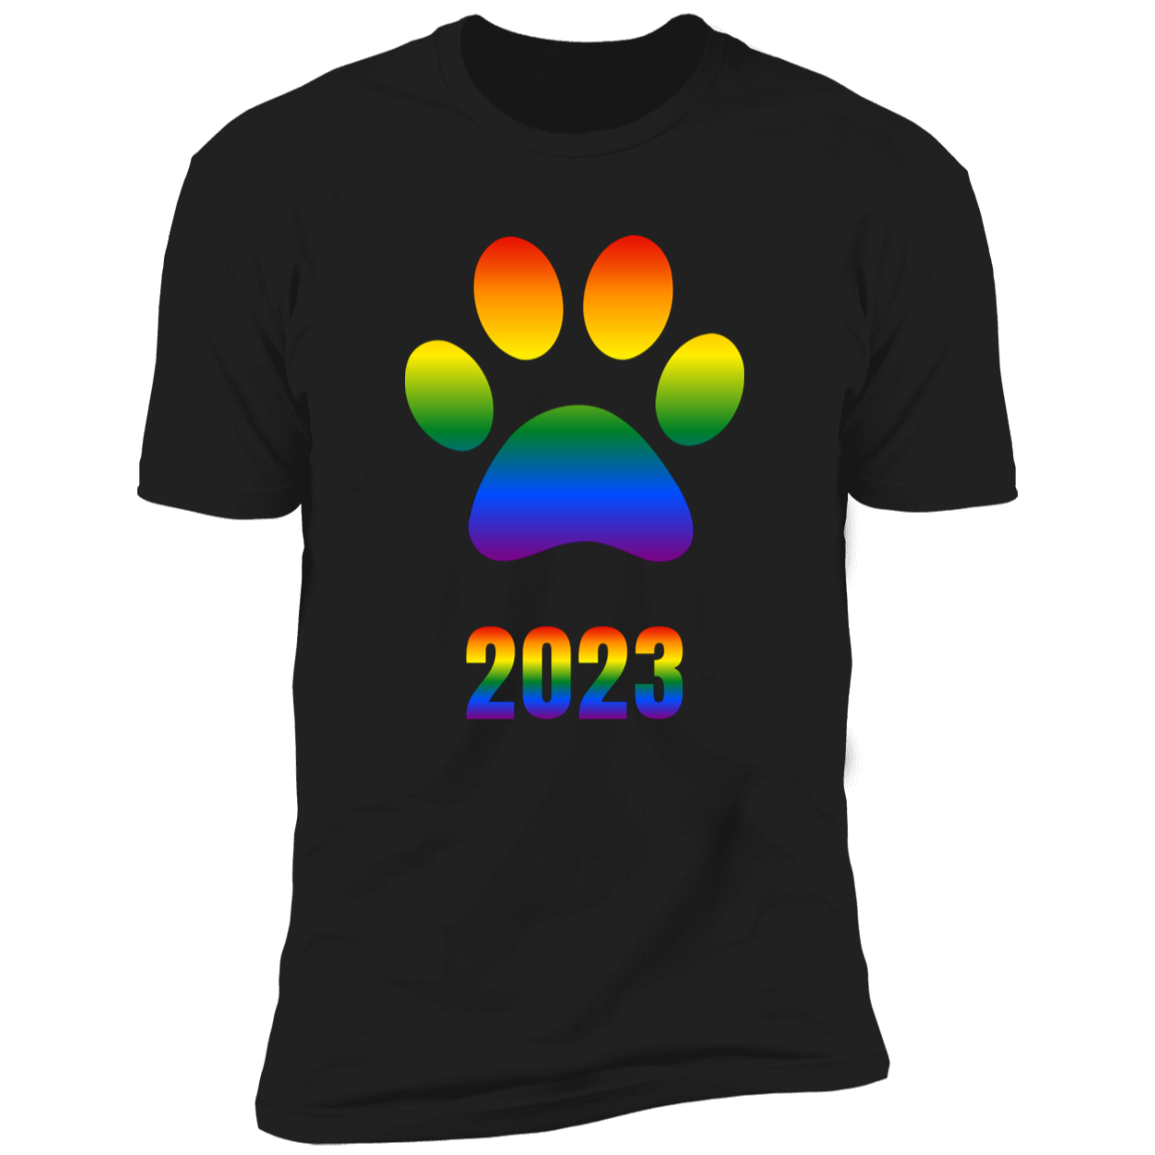 Dog Paw pride 2023 t-shirt, dog pride dog shirt for humans, in black